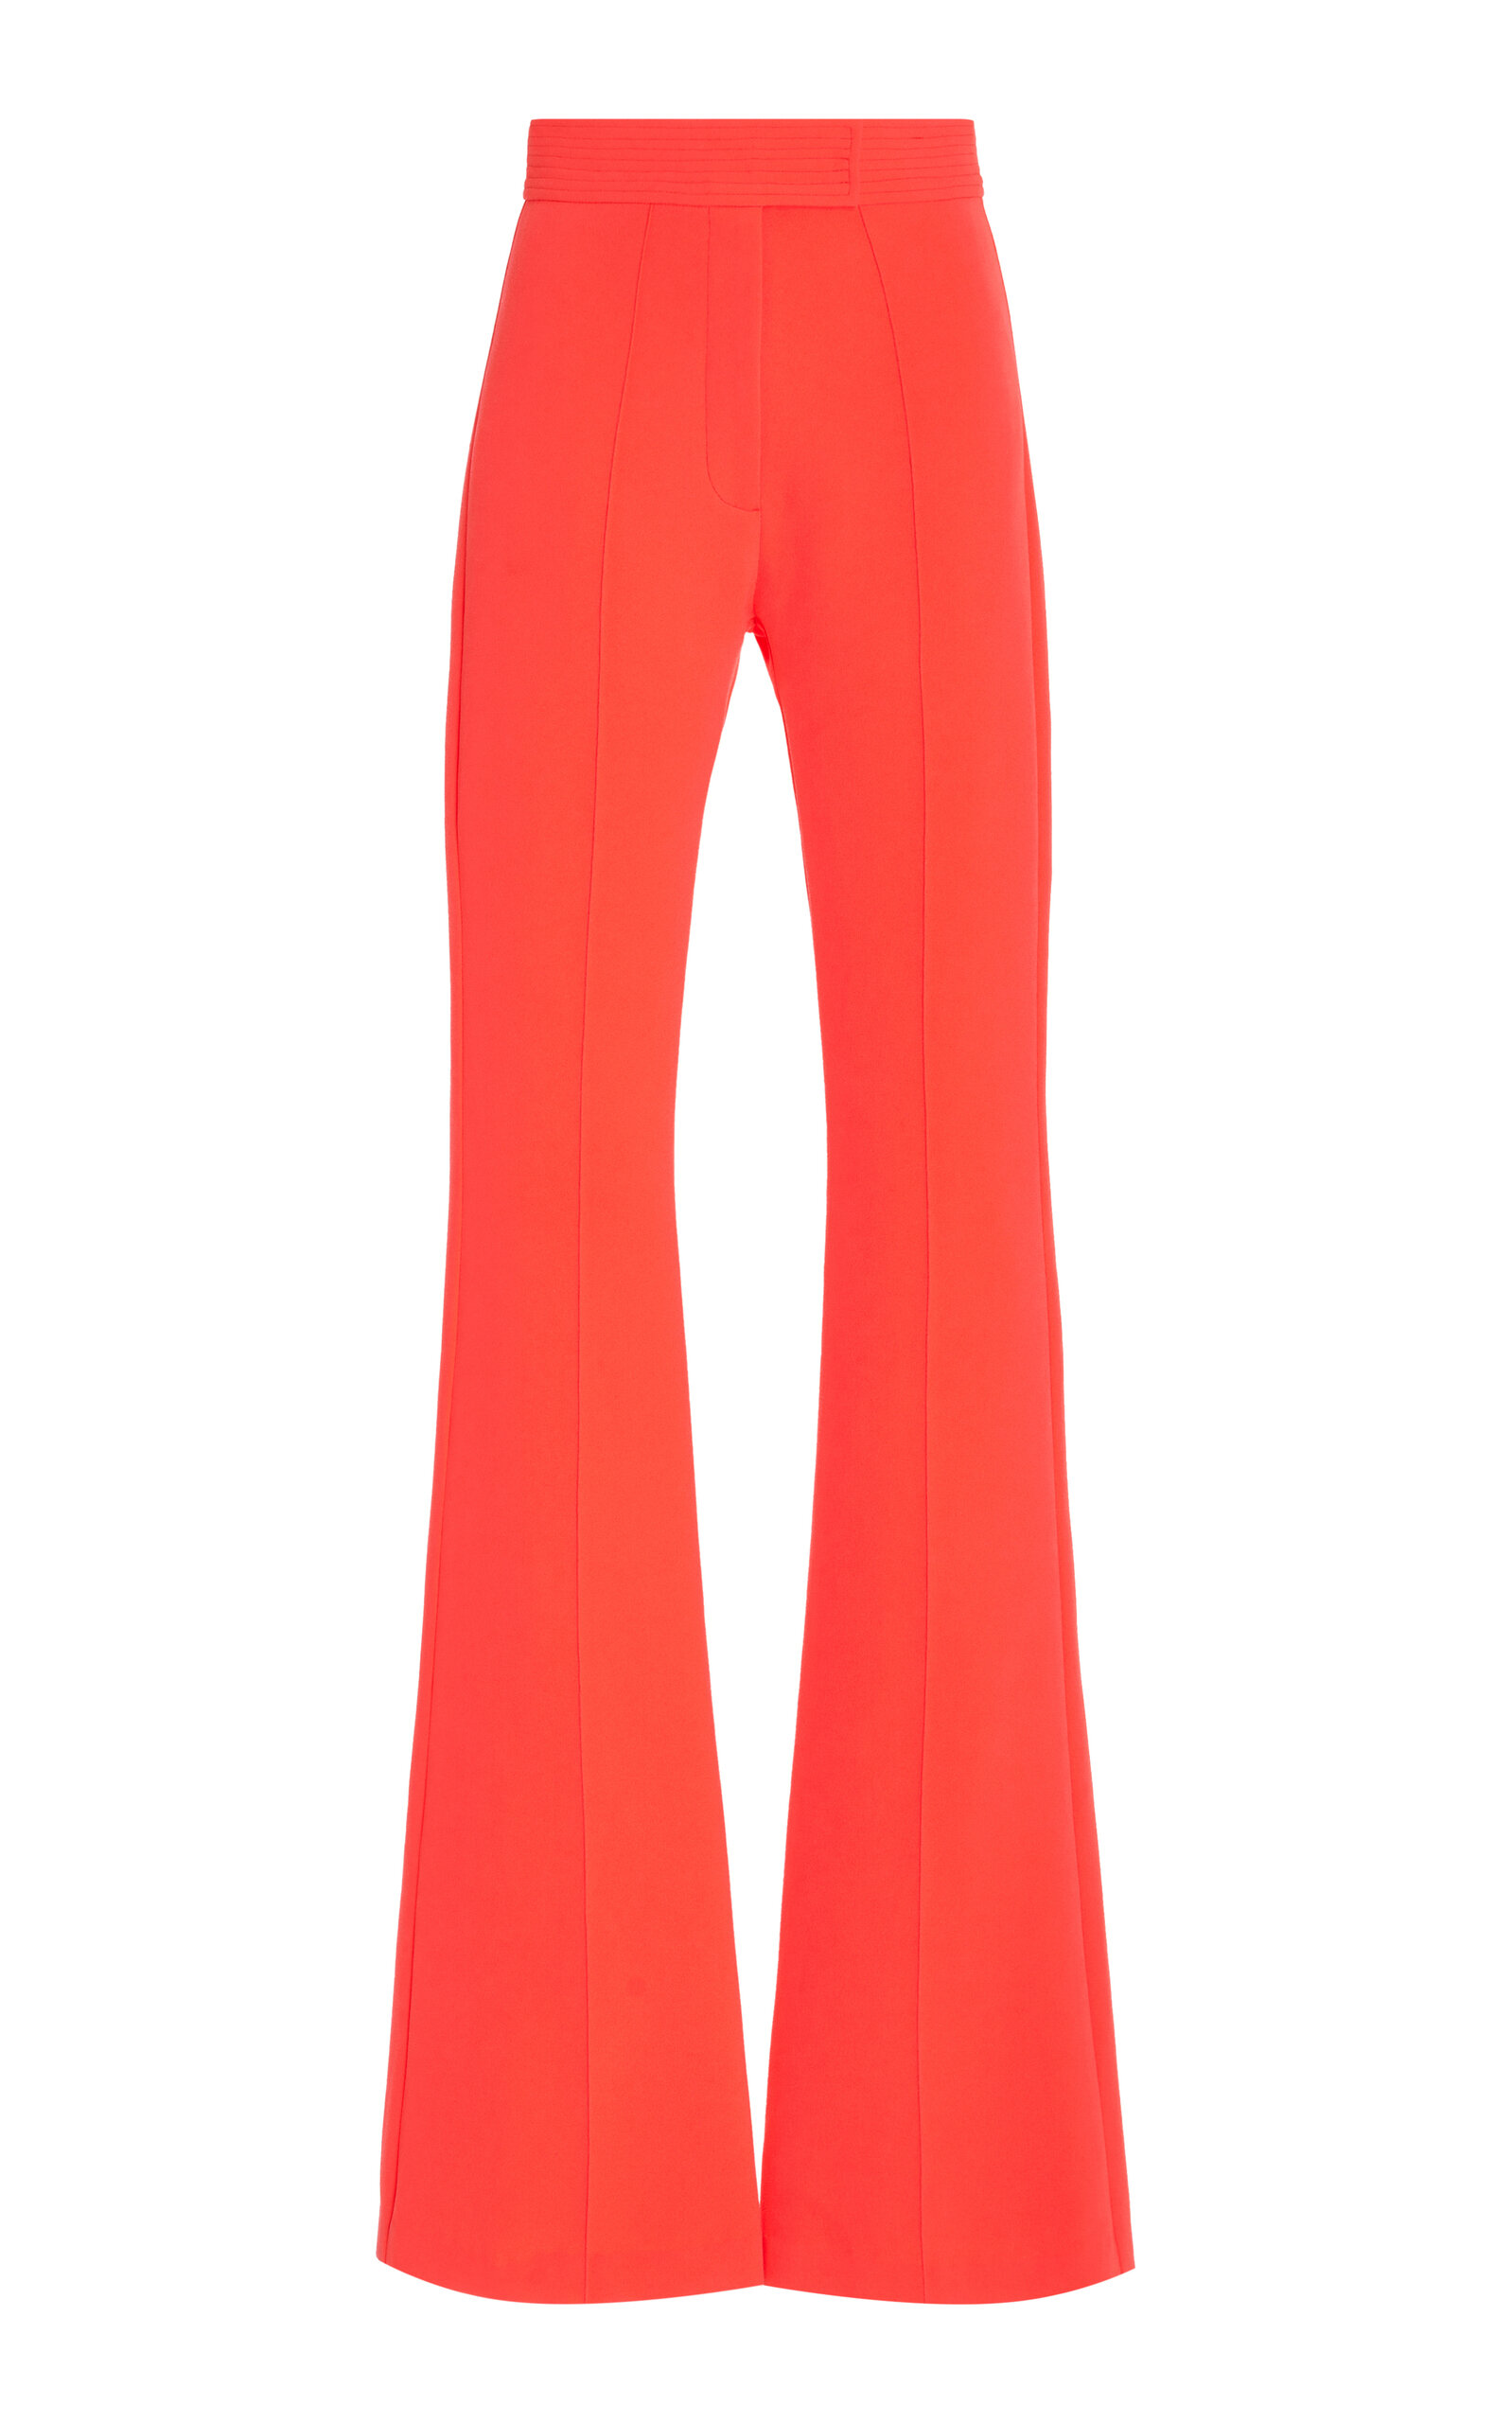 Alex Perry straight-leg tailored trousers - Orange